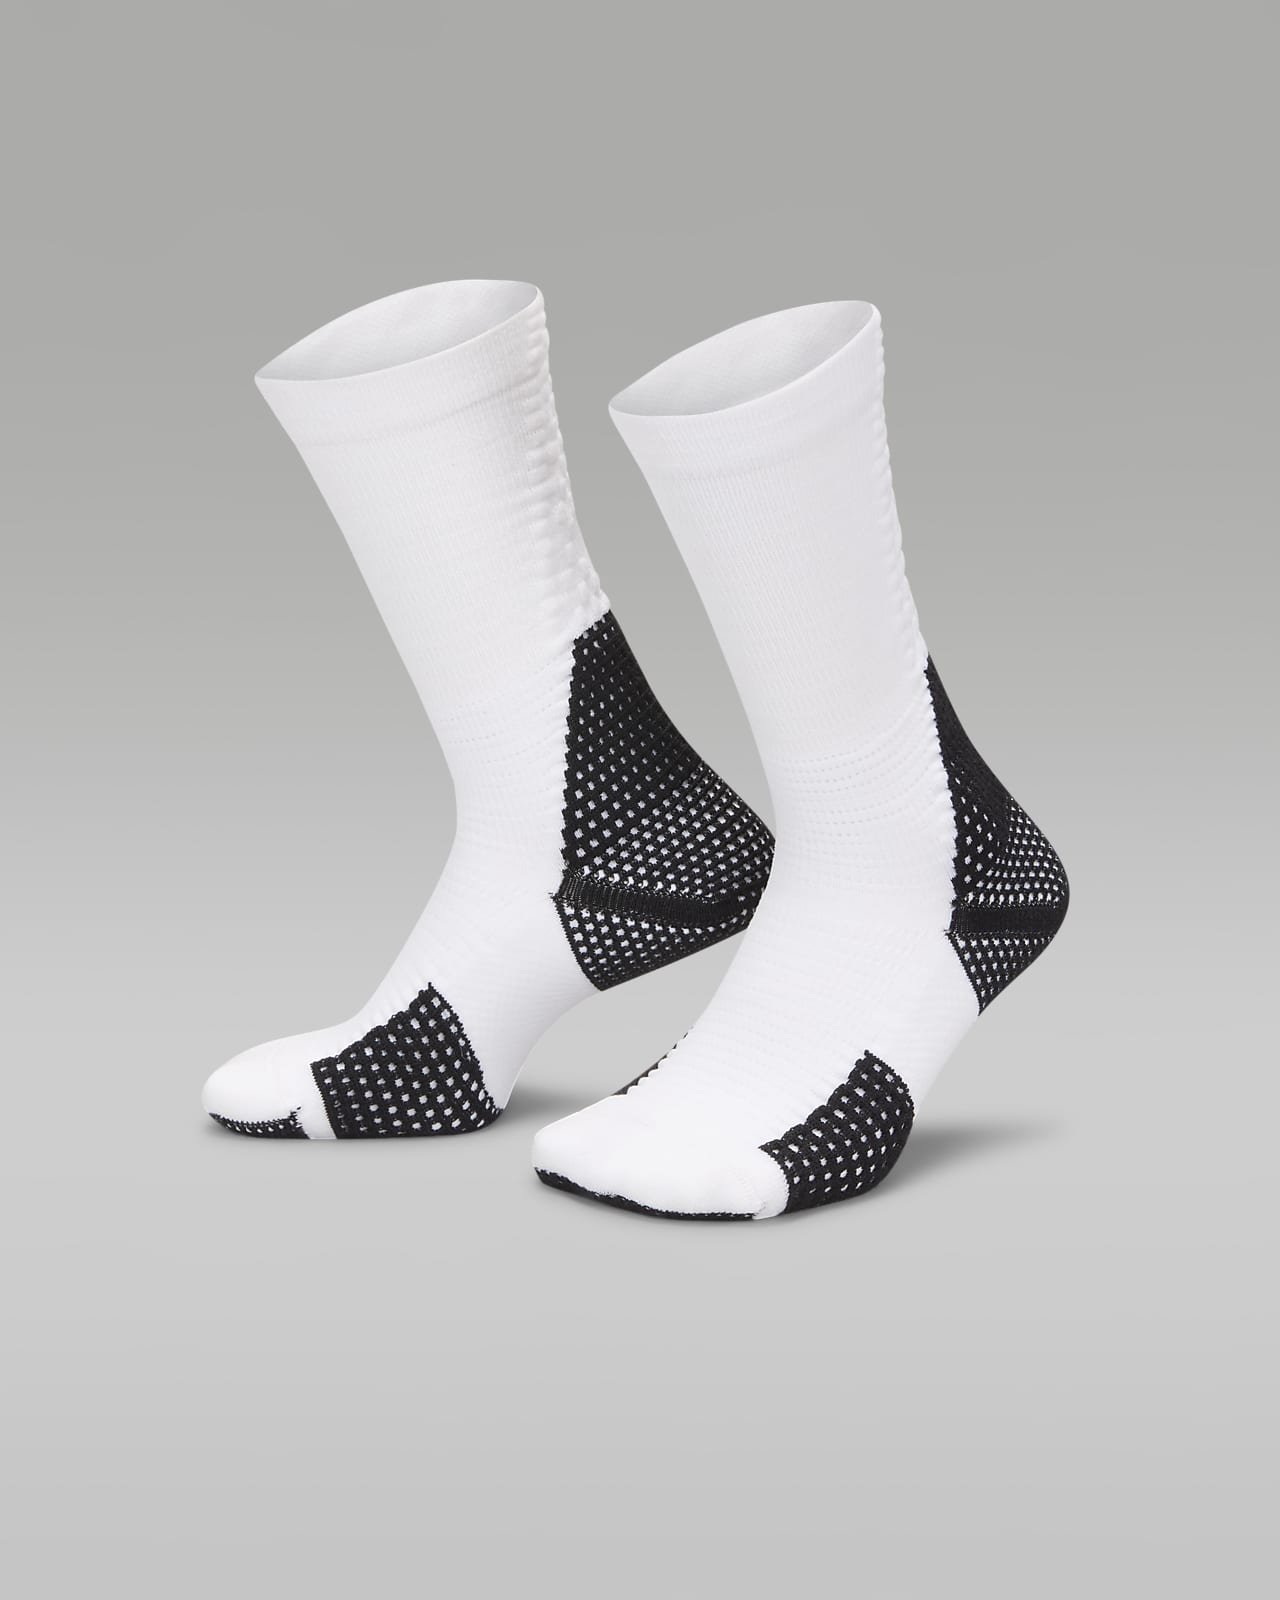 Nike socks: a new Elite level